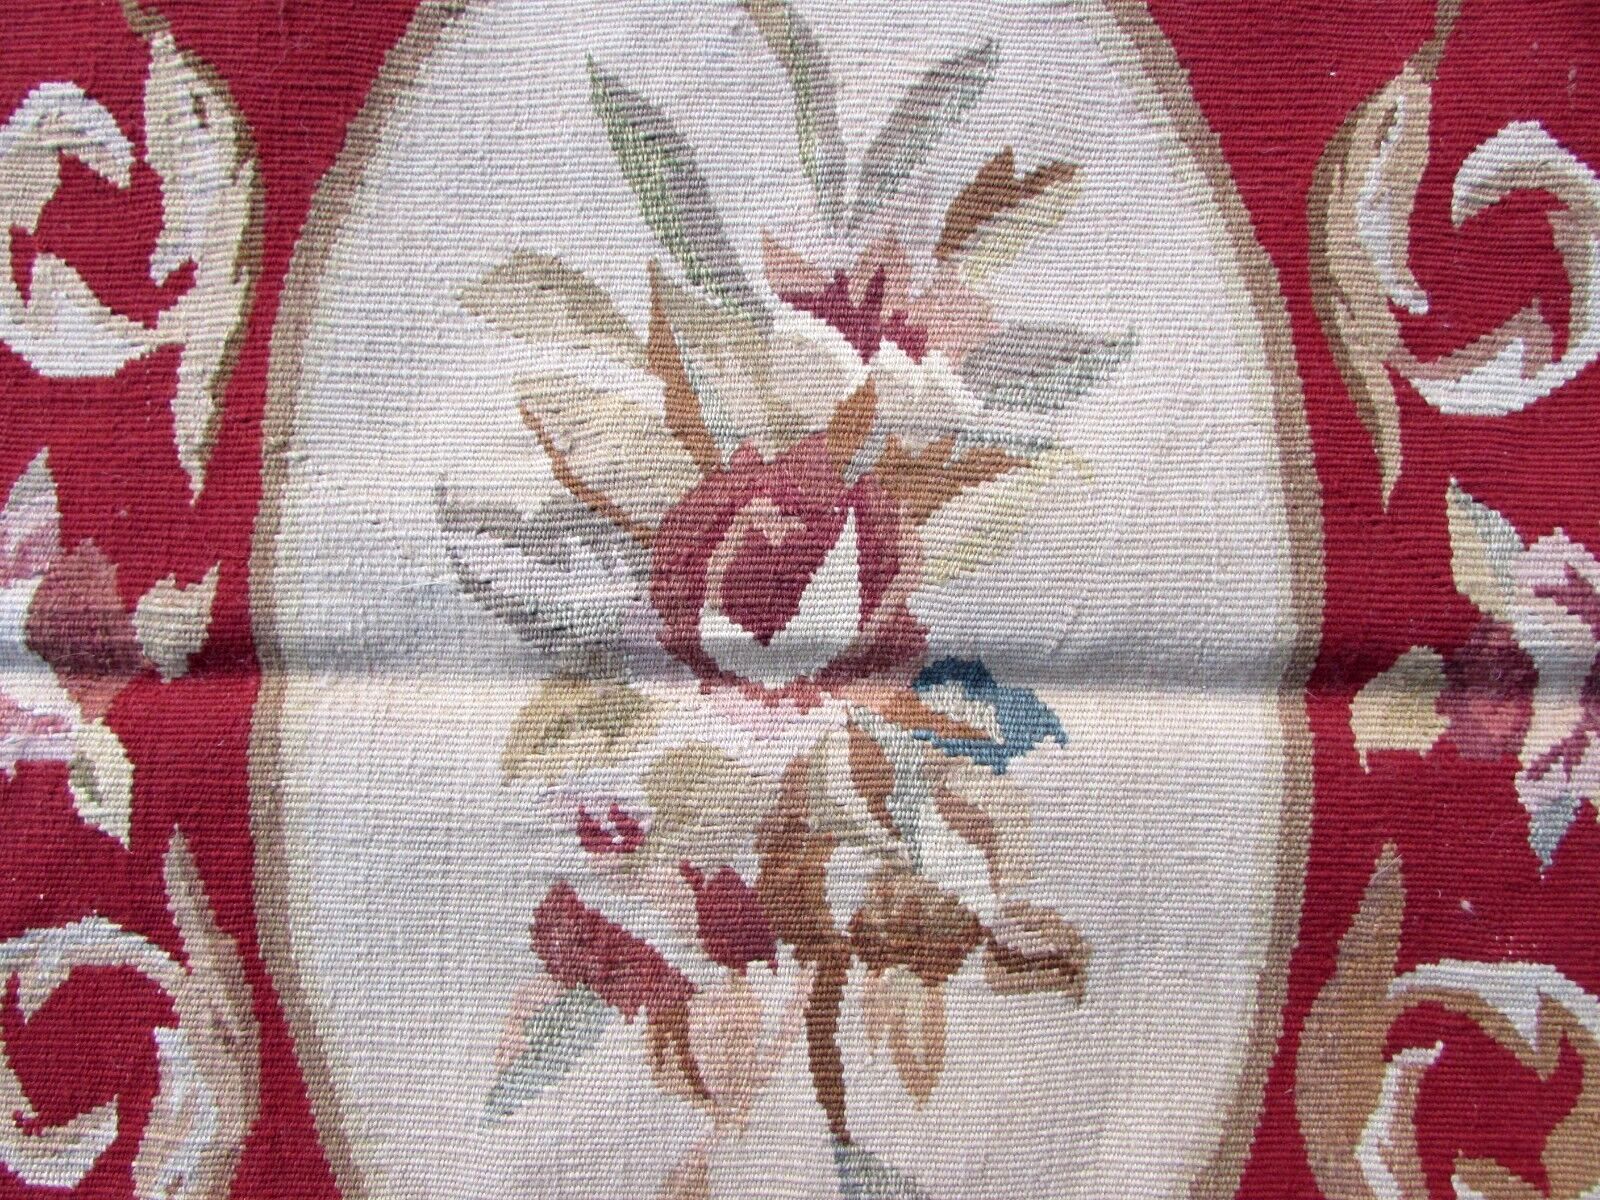 Antique handmade rug with ornate details